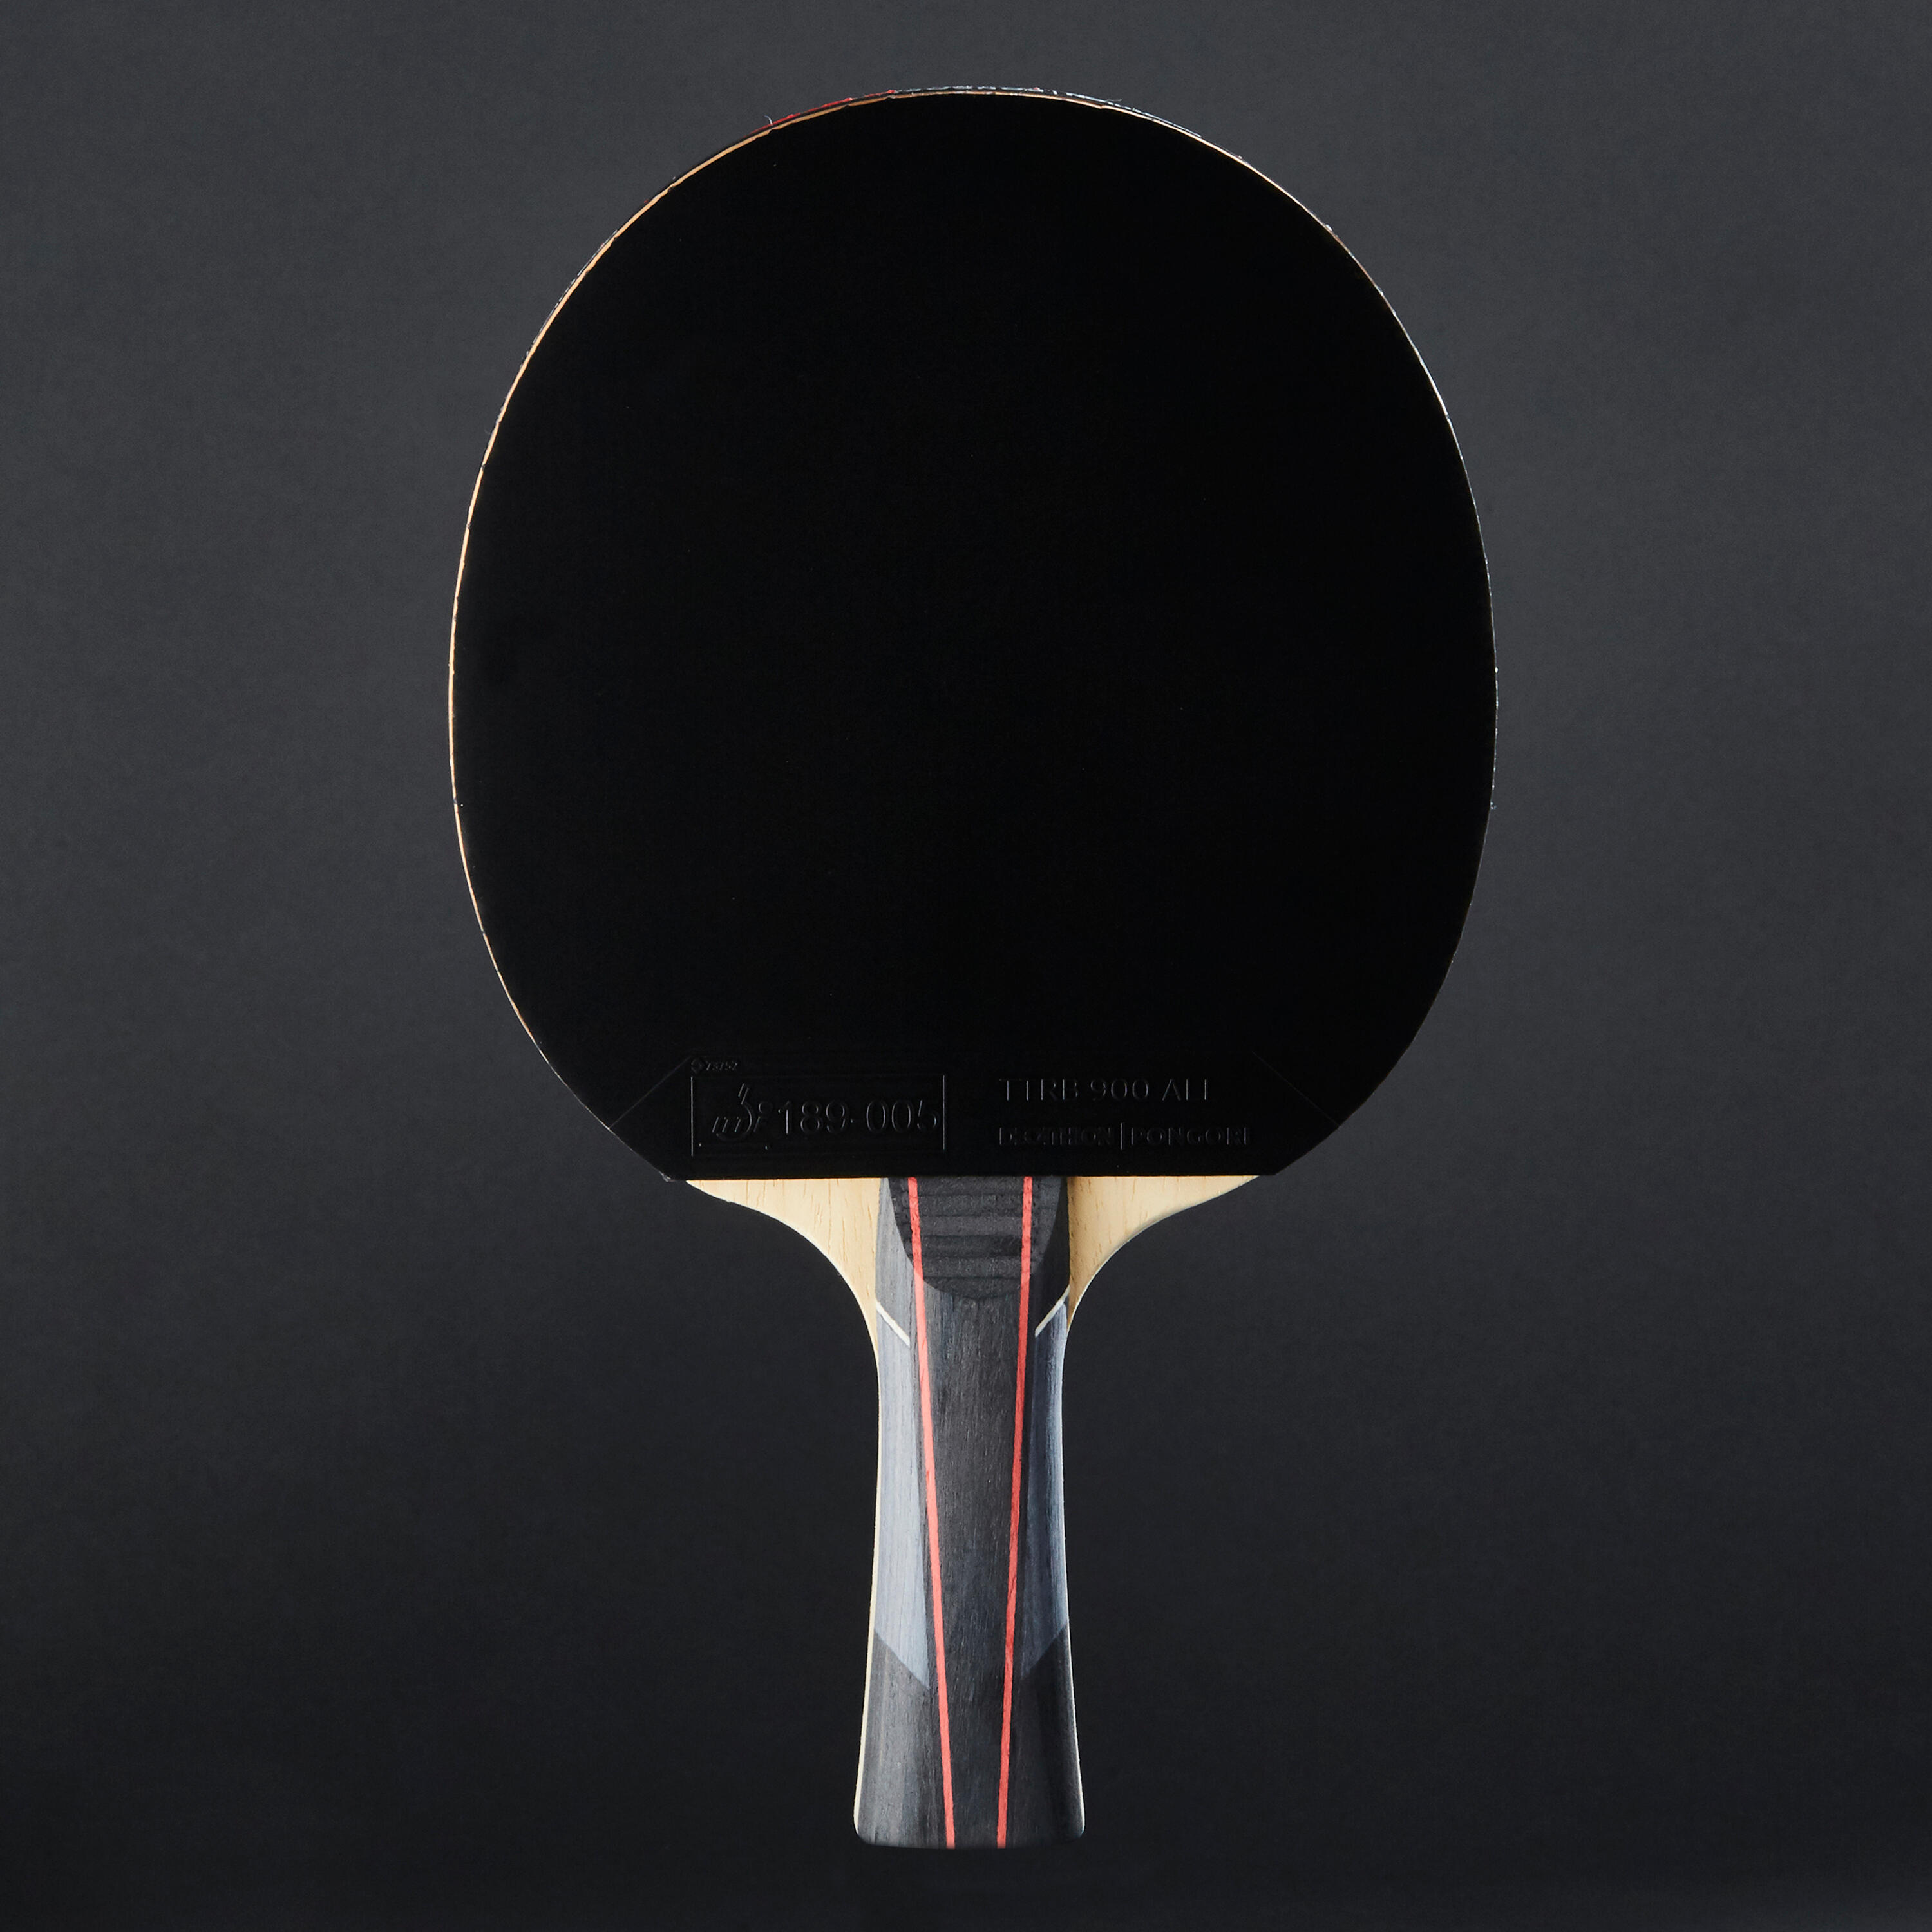 Club Table Tennis Bat TTR 900 All 5/9